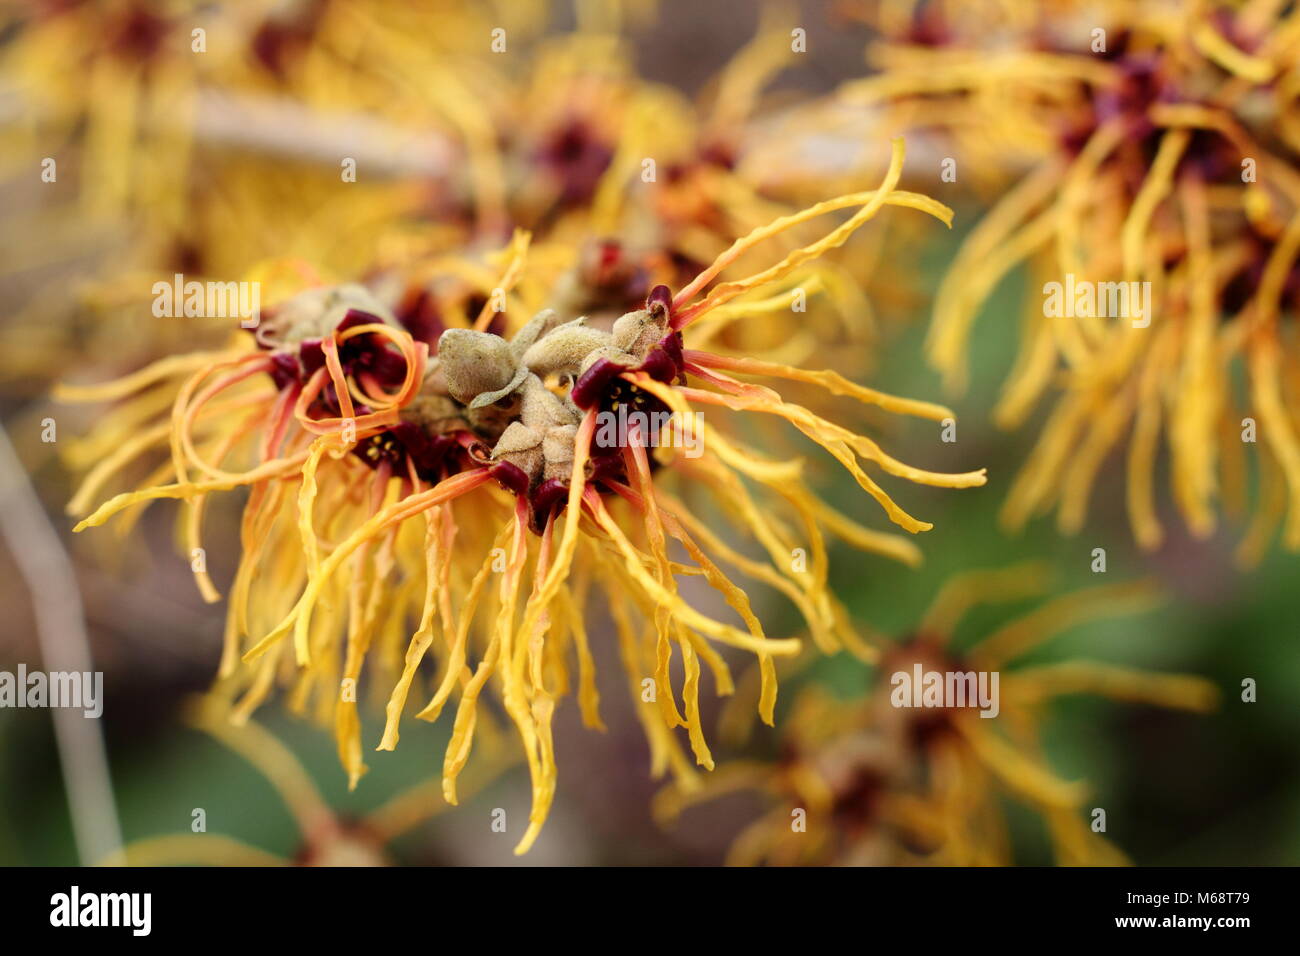 Spidery blooms of Hamamelis x intermedia 'Glowing Embers' witch hazel, flowering in a winter garden, UK Stock Photo